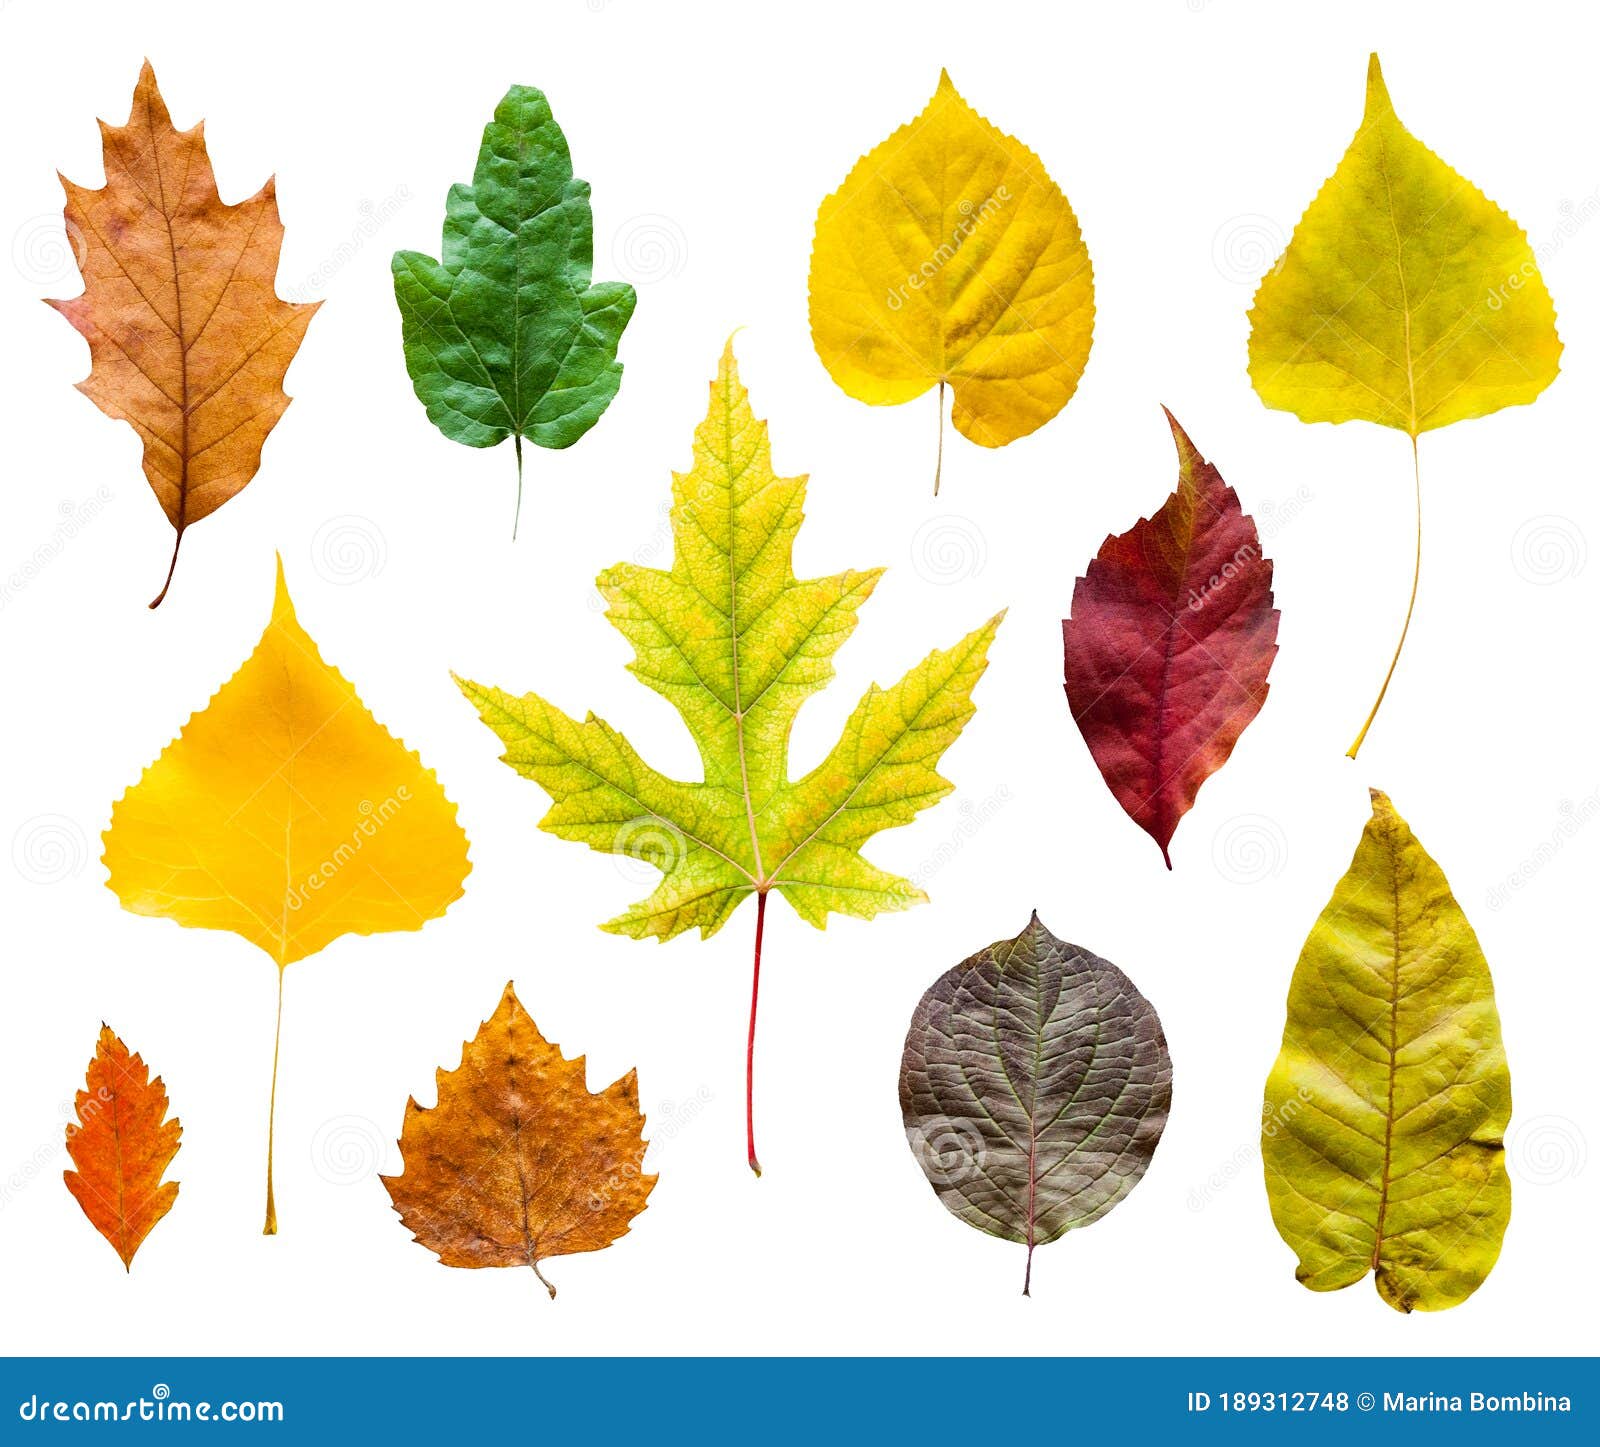 Colorful Autumn Leaves Set Isolated on White Background Stock Photo ...